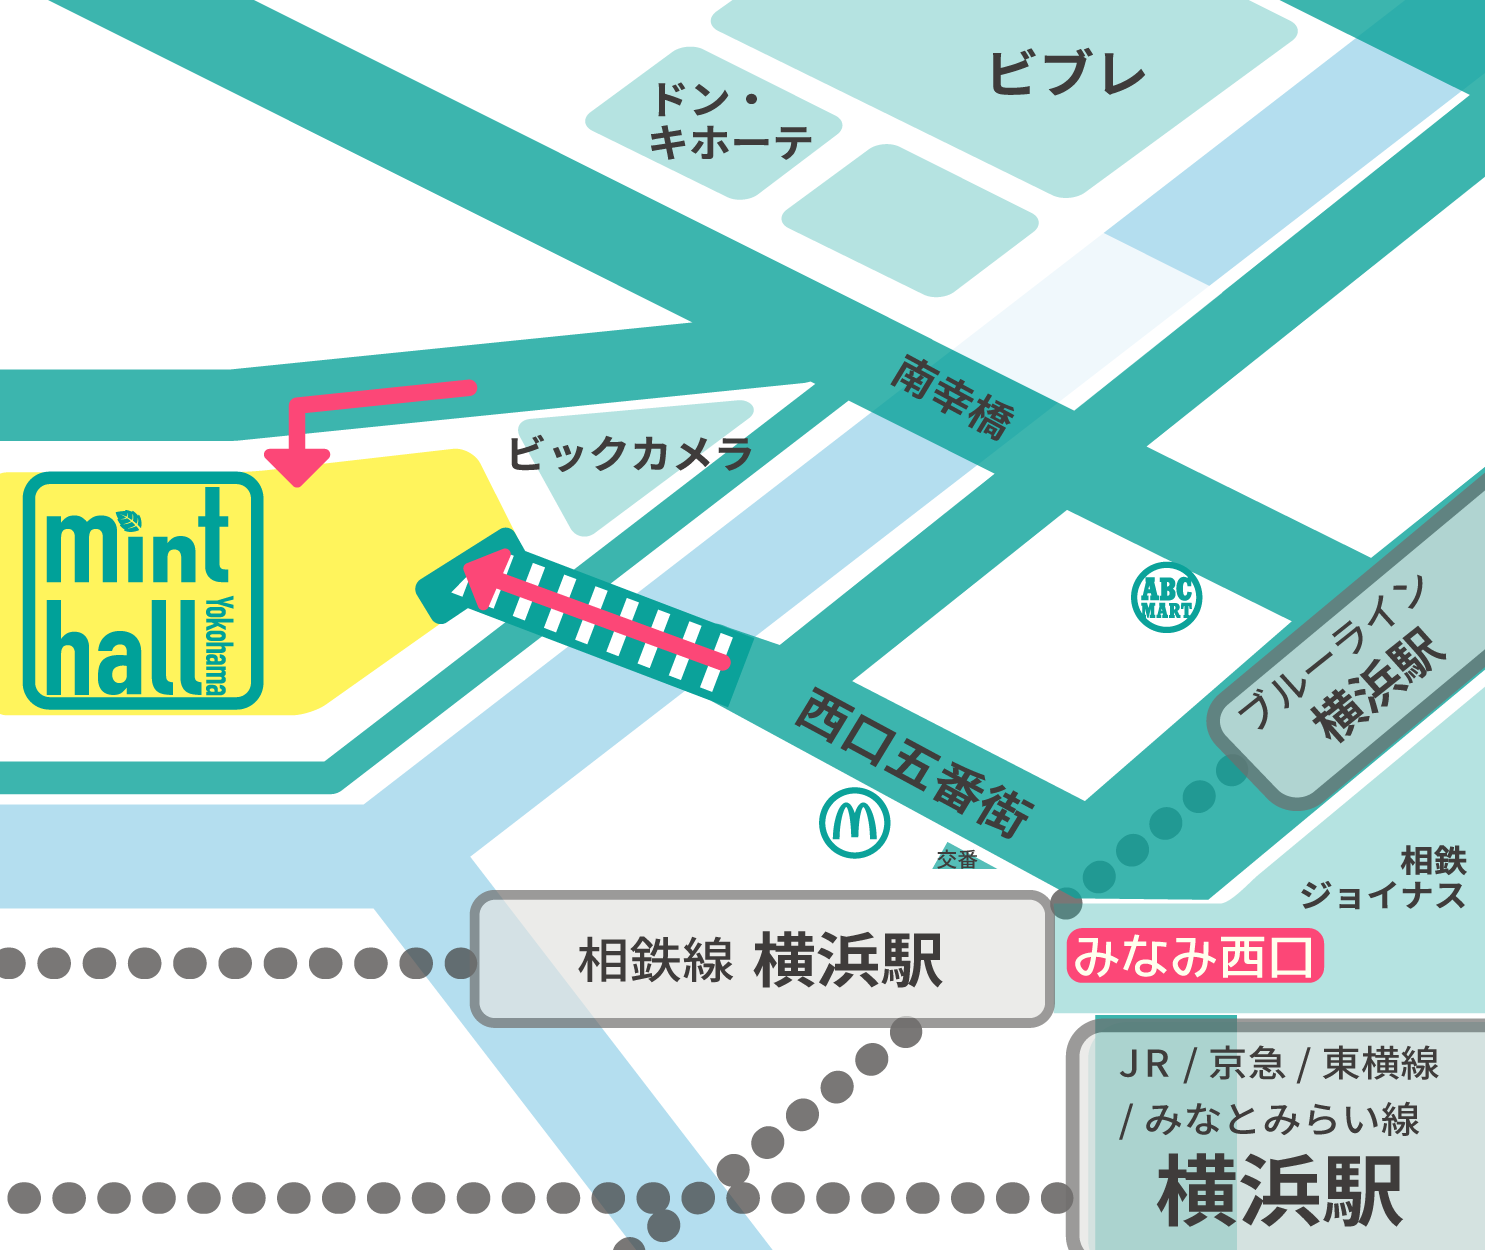 Yokohama mint hall MAP